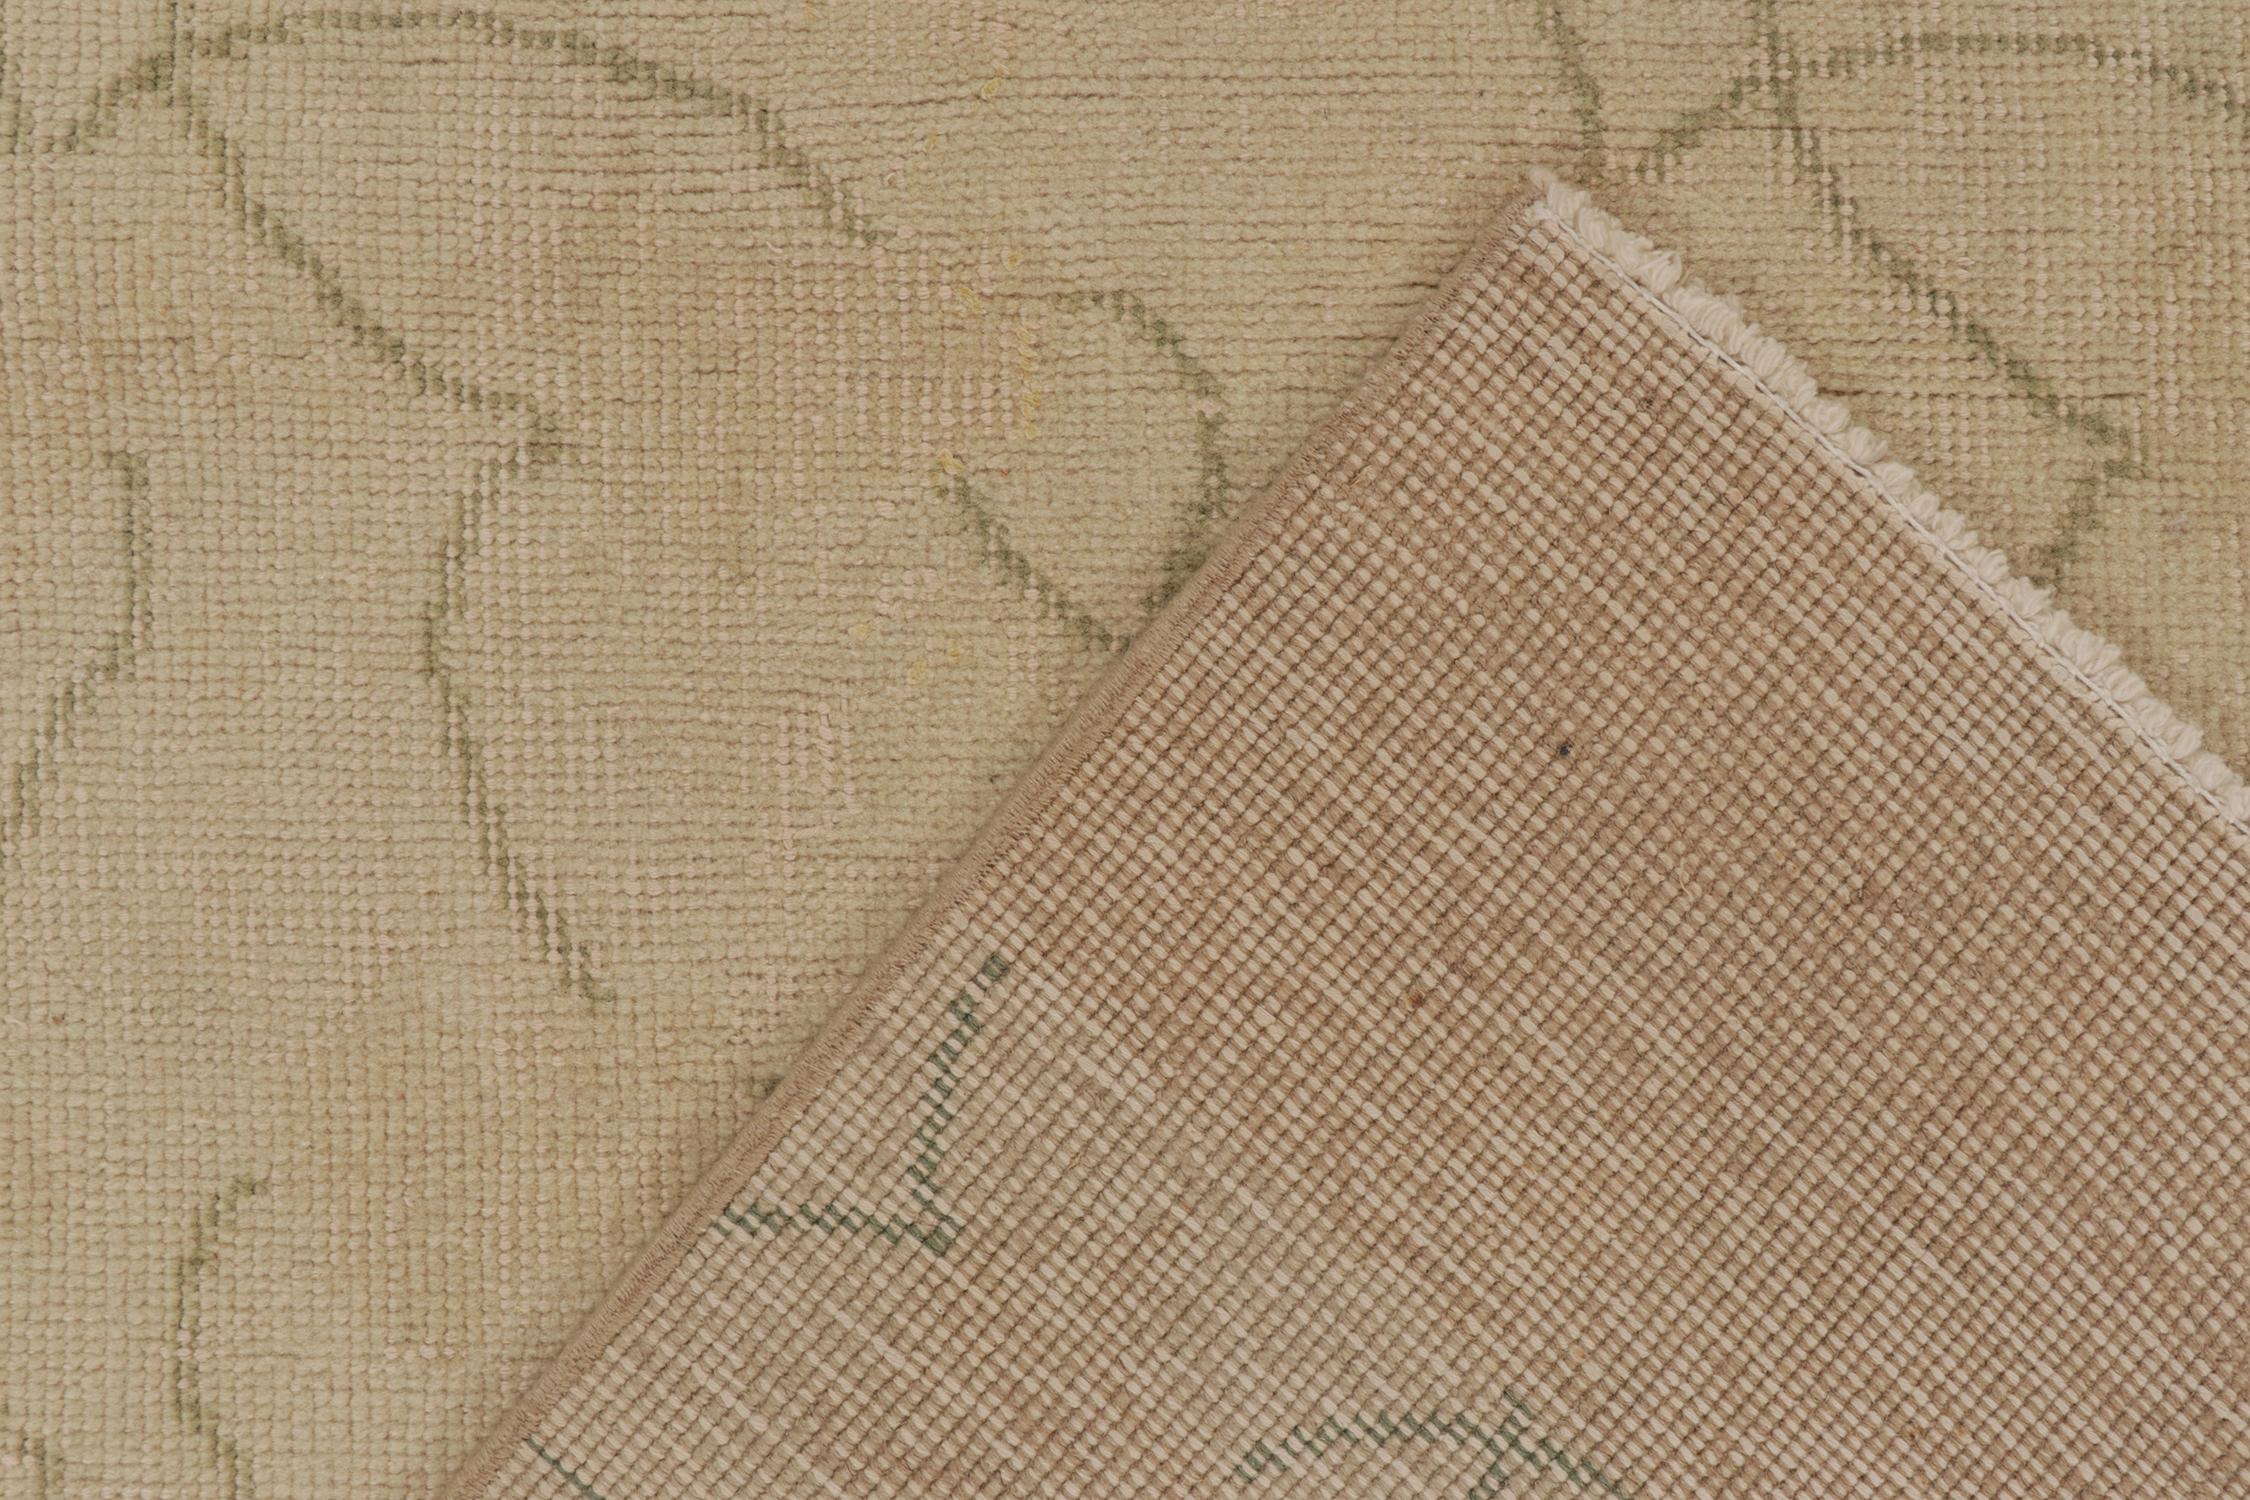 Wool Vintage Zeki Müren Rug in Beige and Green Abstract Patterns, by Rug & Kilim For Sale